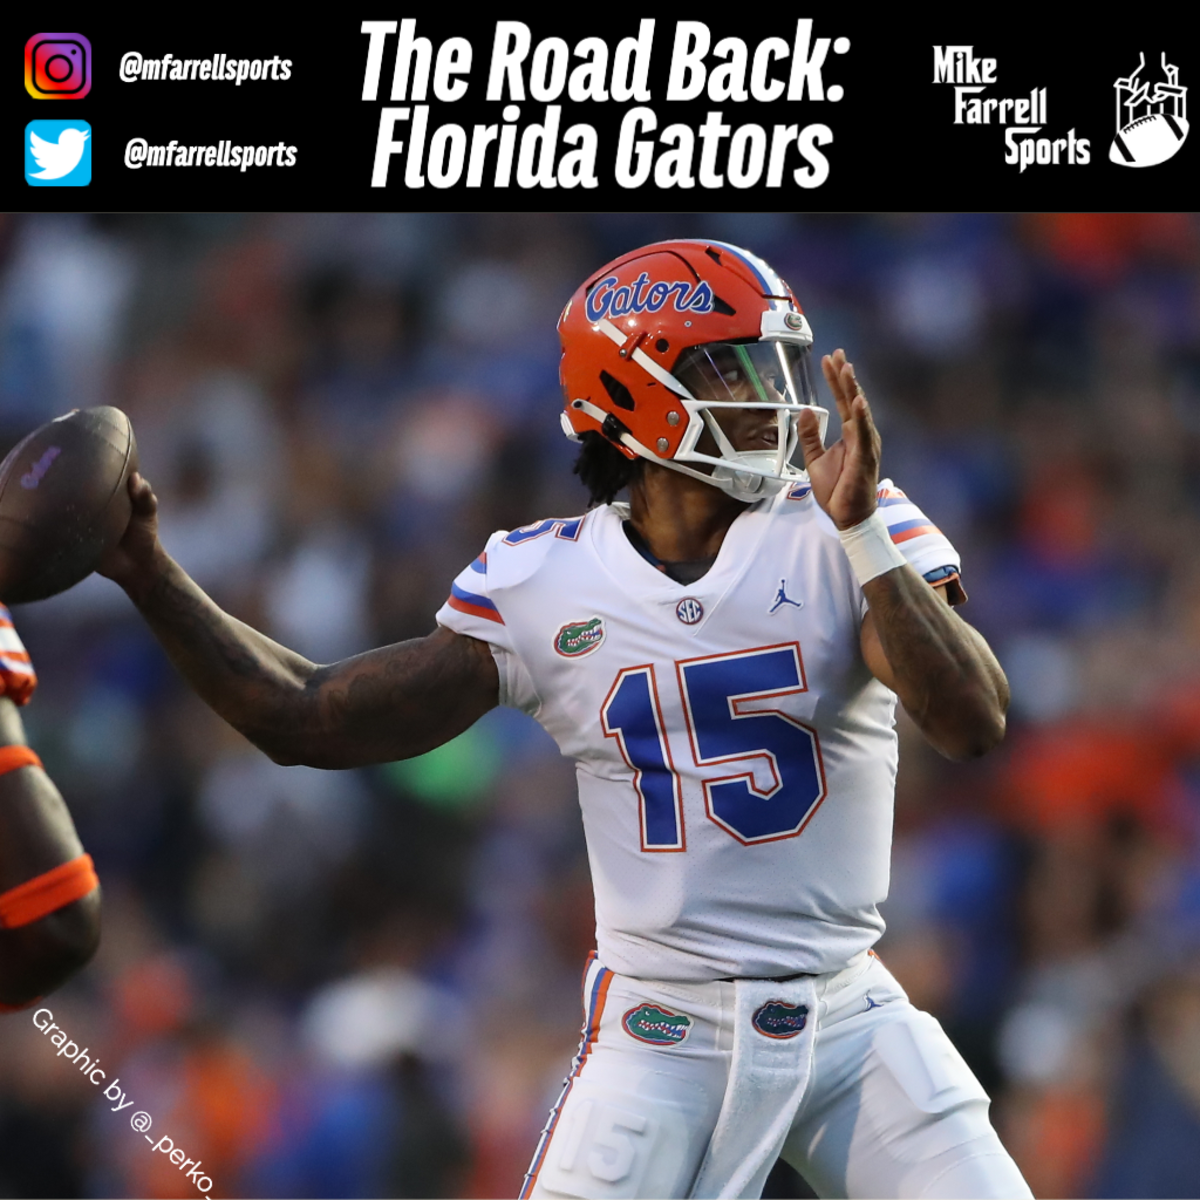 The Road Back Florida Gators